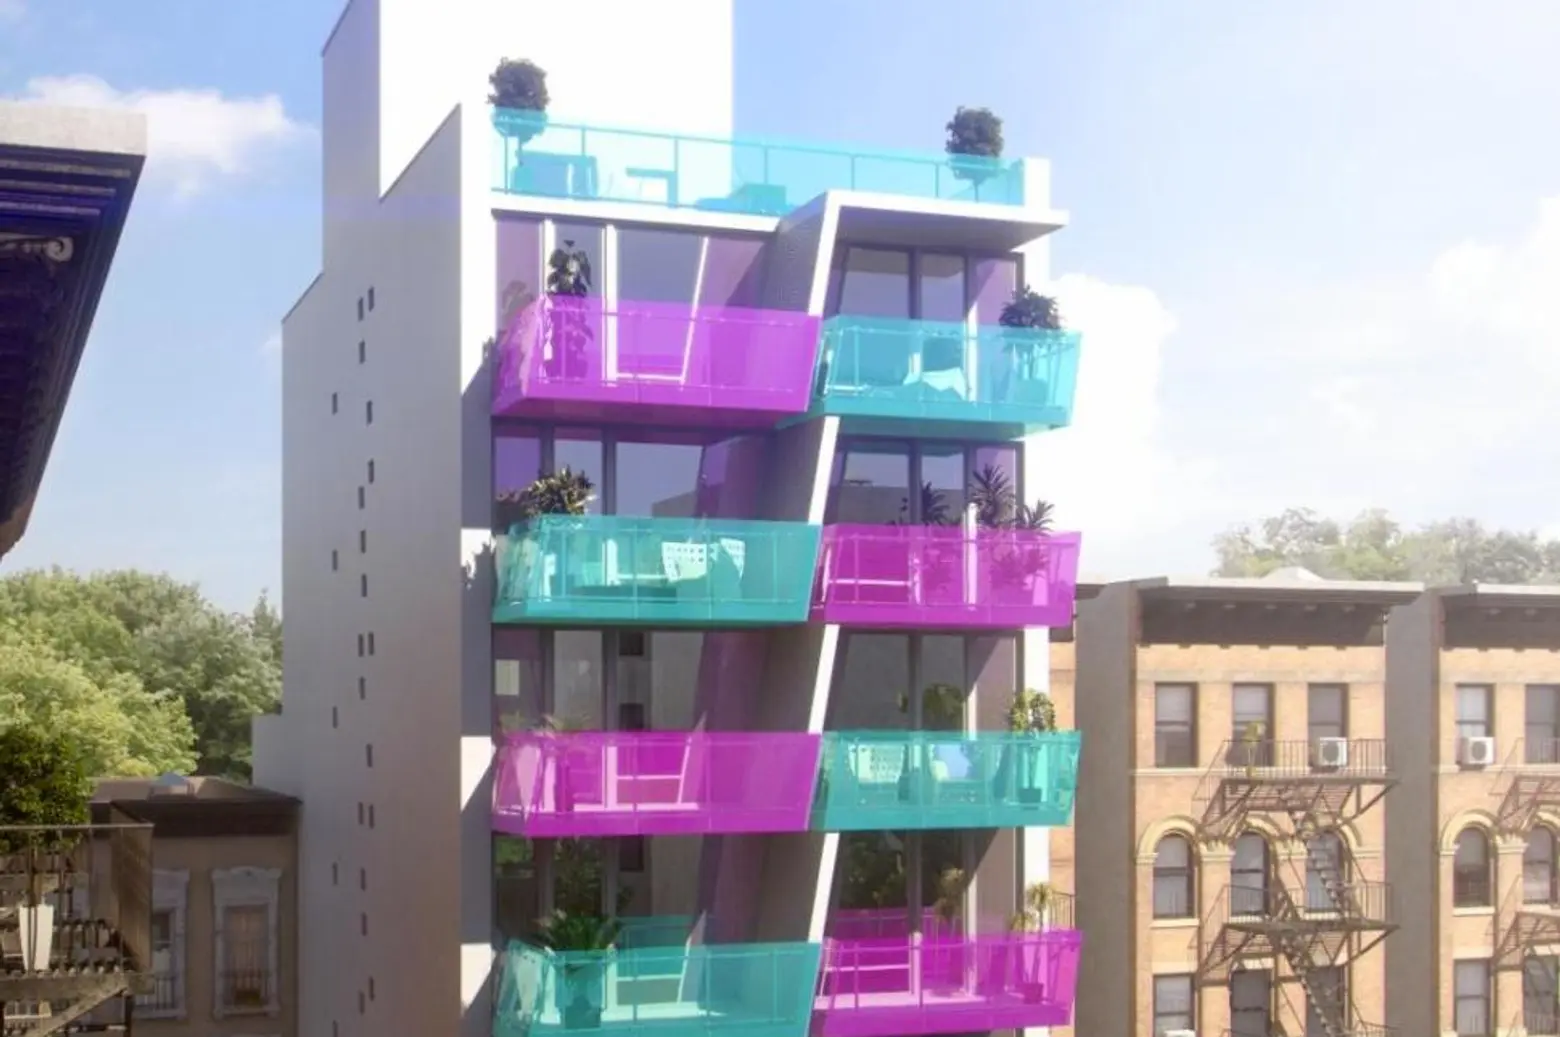 Real Estate Wire: Karim Rashid’s Colorful Harlem Design Gets a Thumbs-Down; Islamic Cultural Center Near Ground Zero Seeks Permits